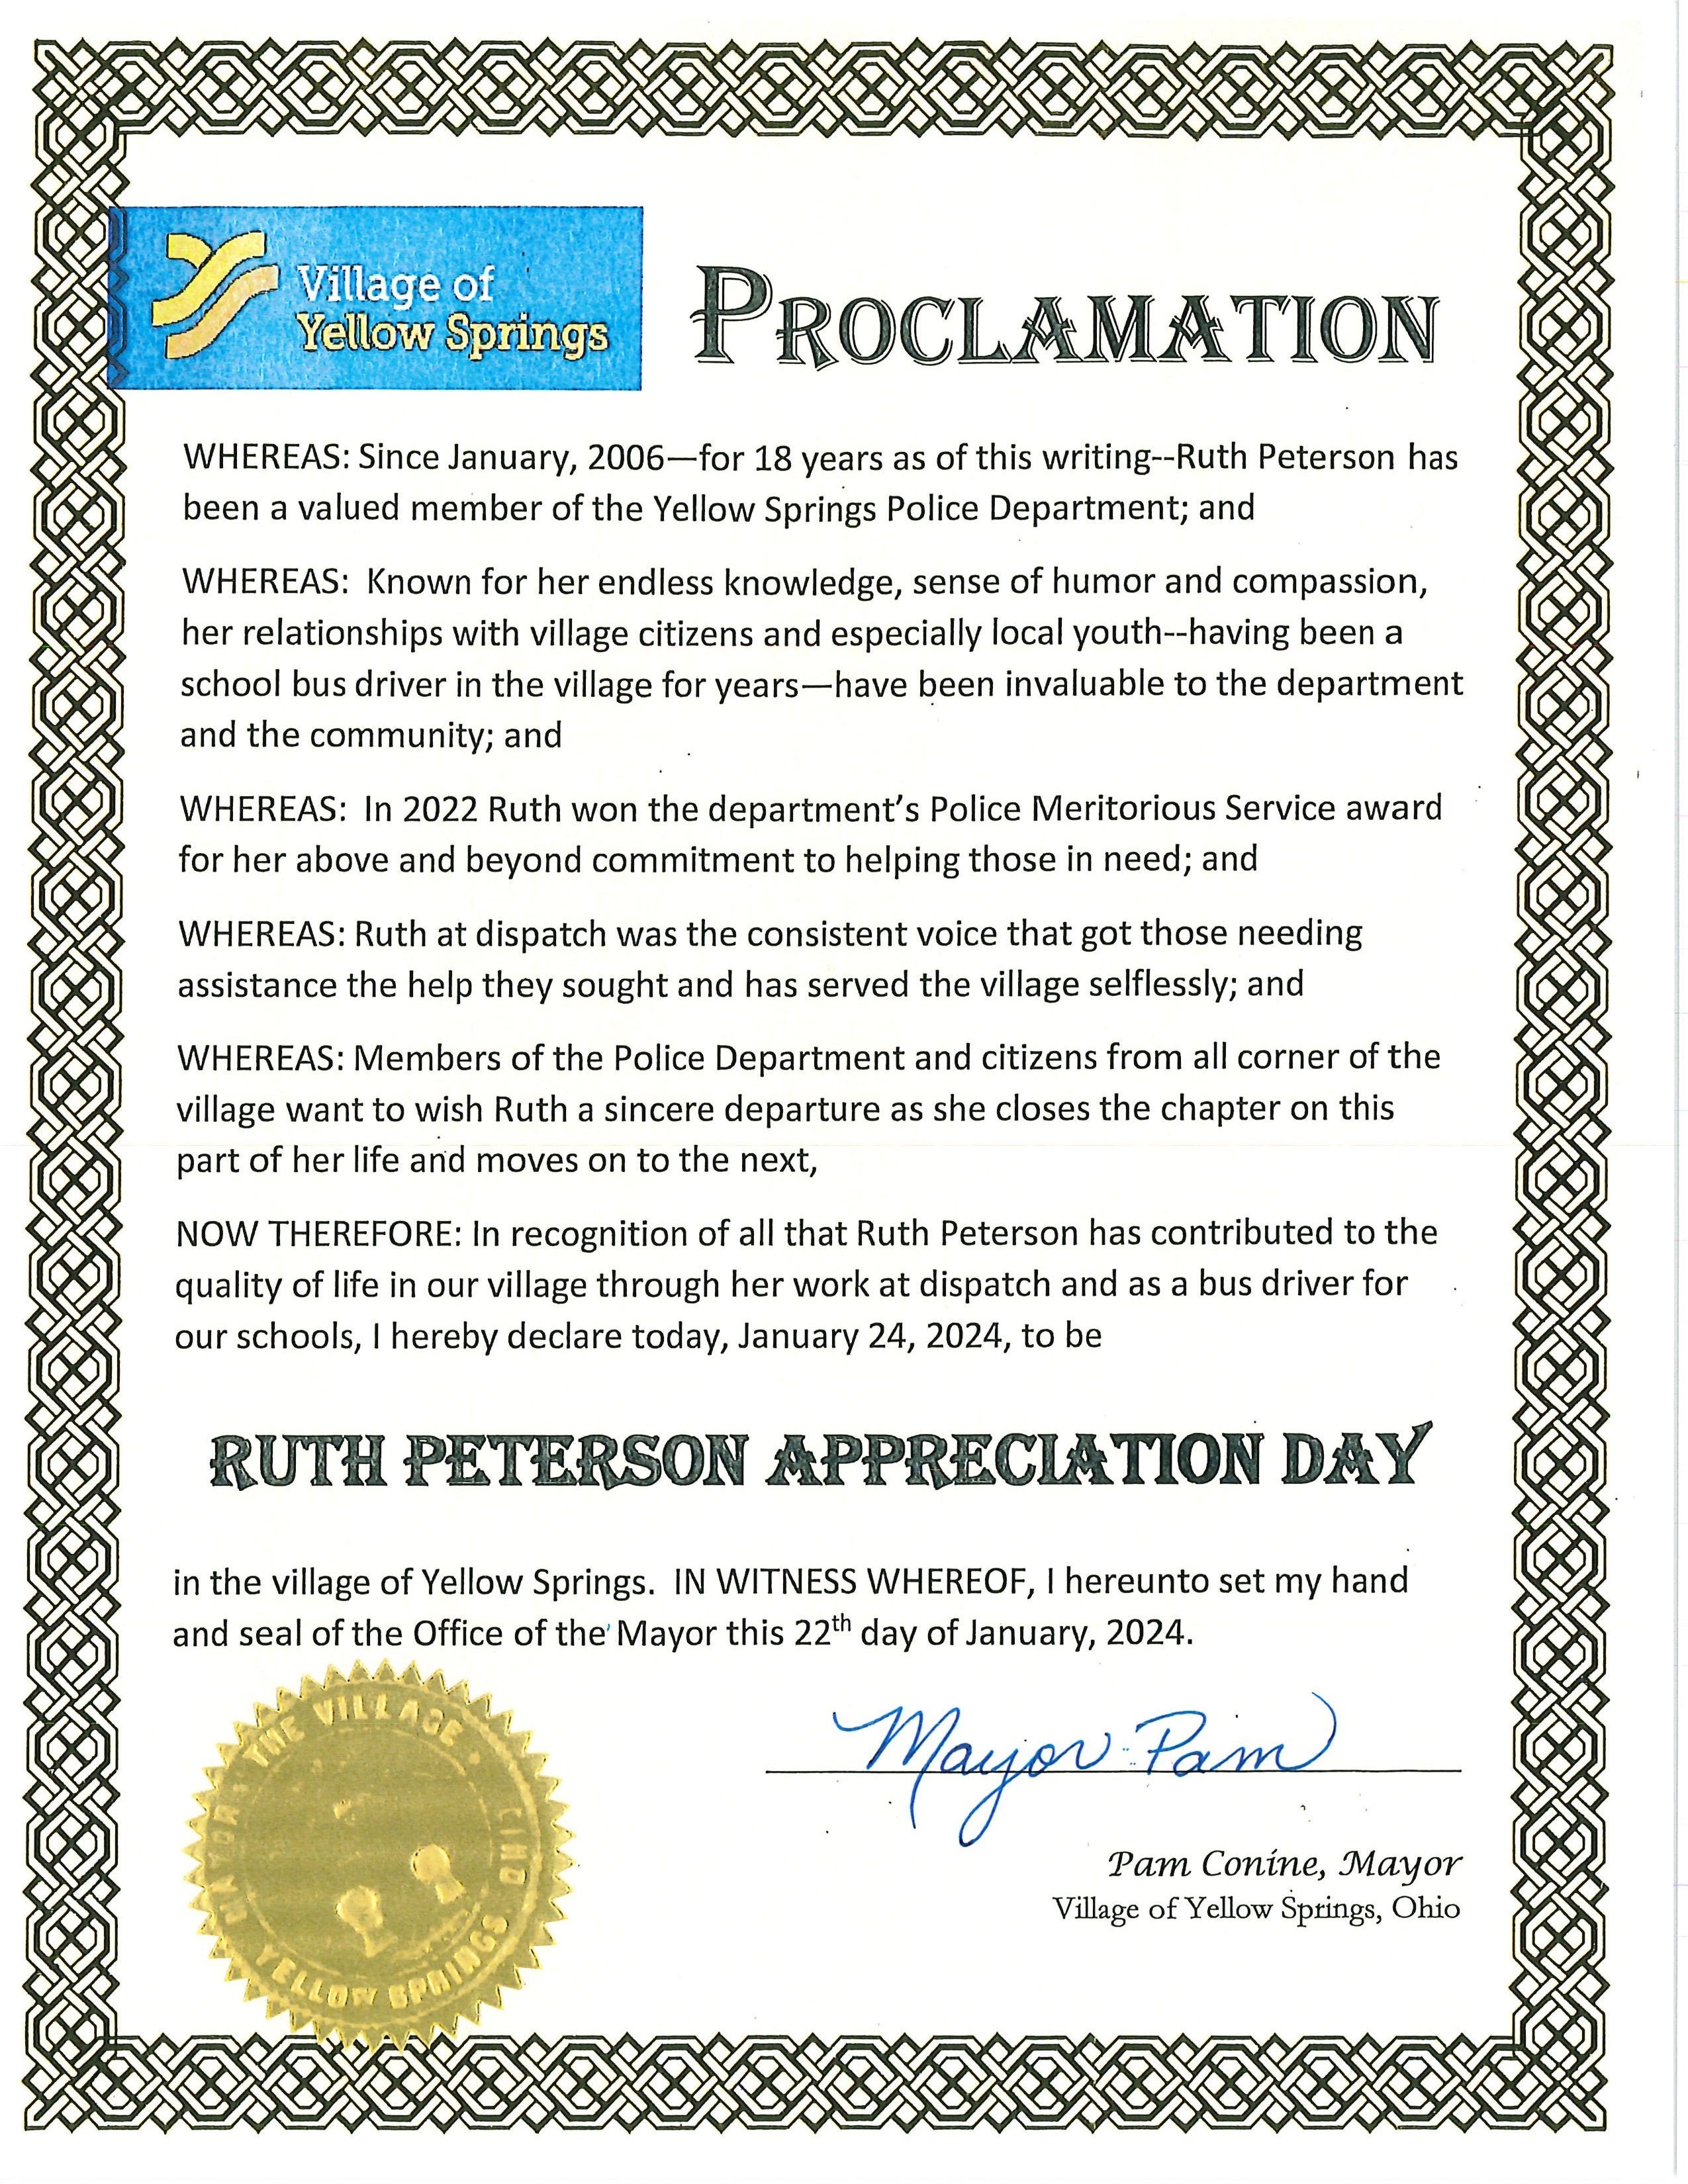 Ruth Peterson Appreciation Day